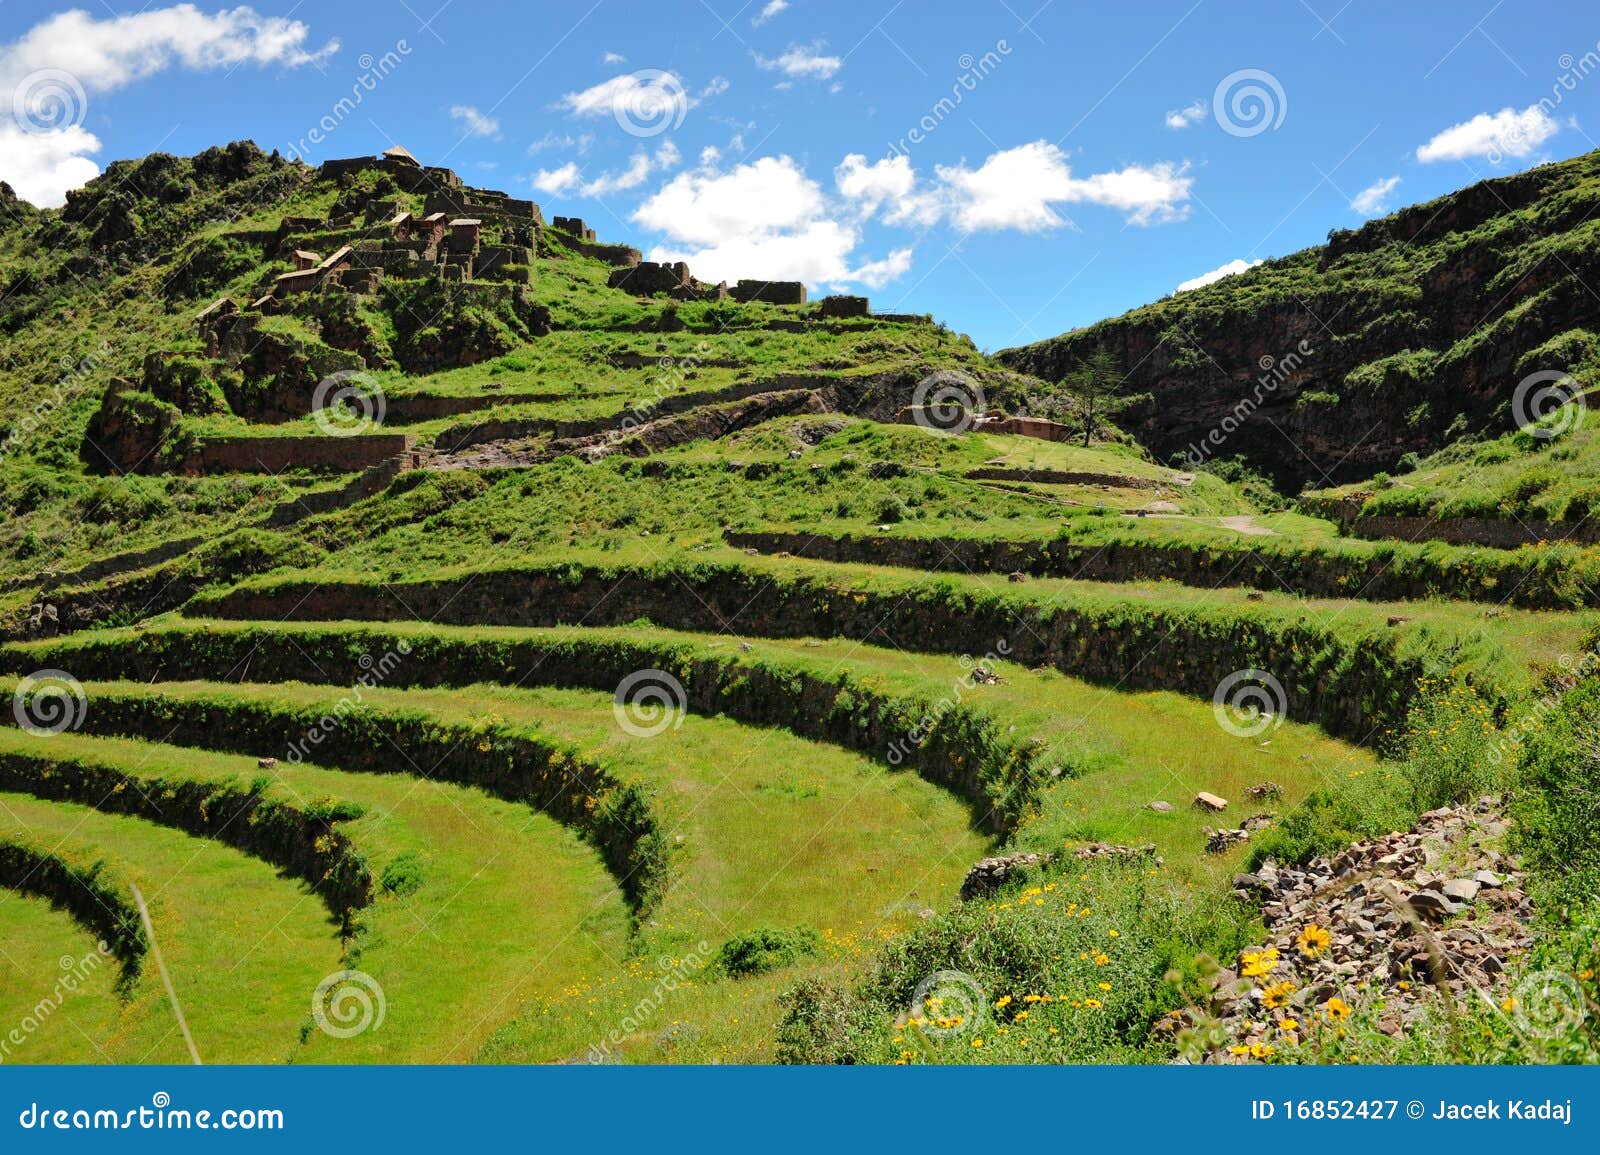 hillside terraces in urubamba valley, peru